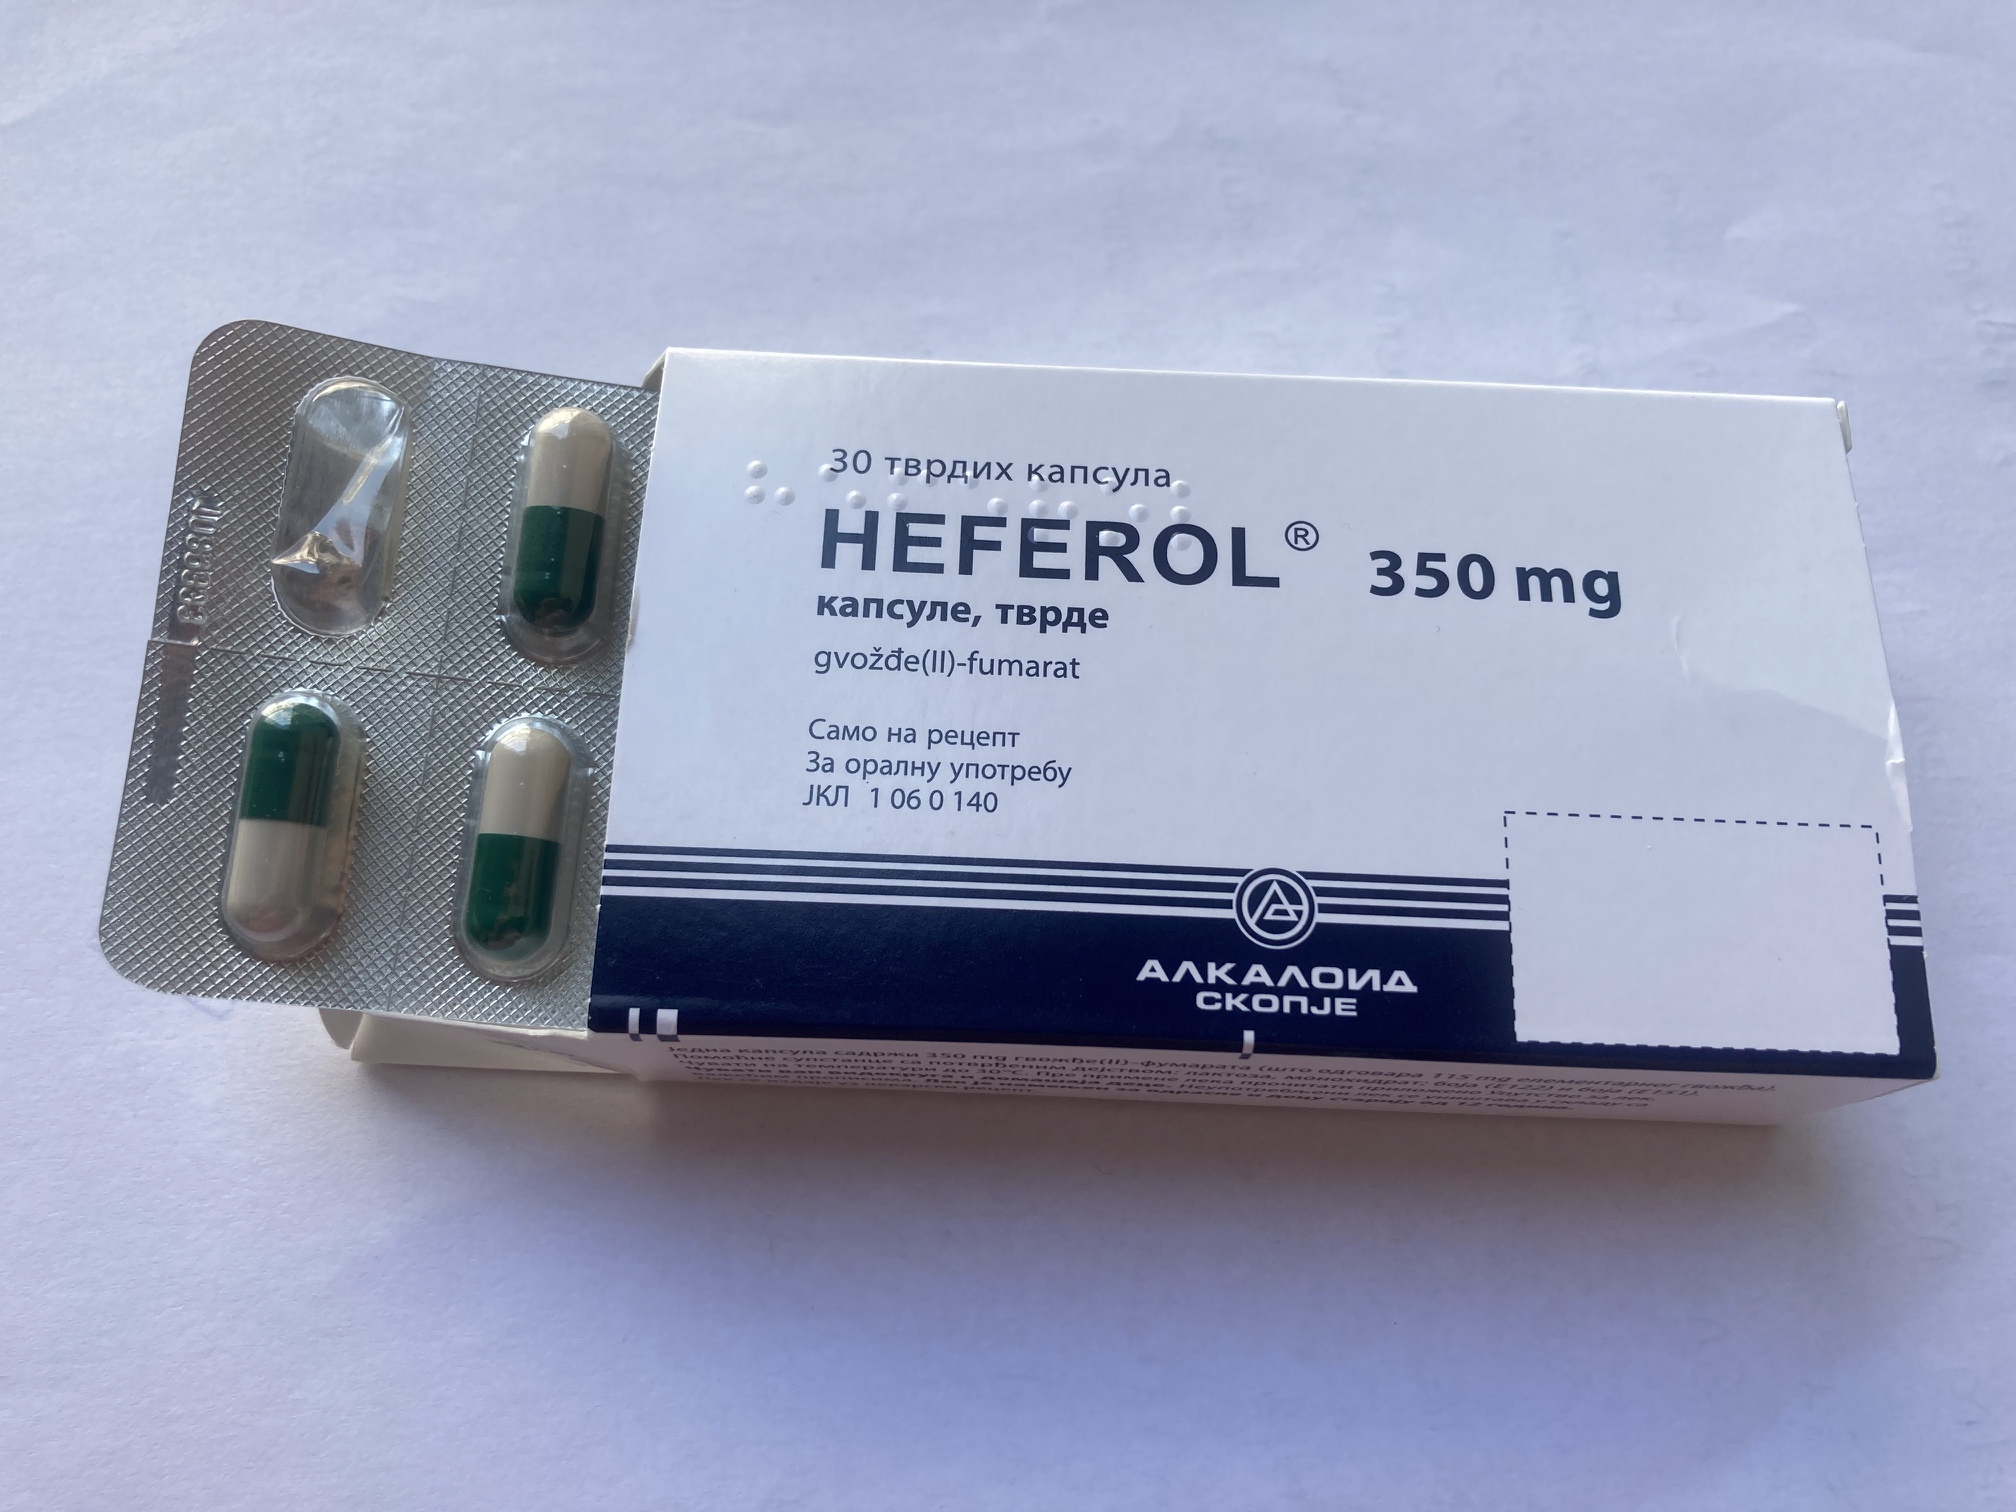 heferol